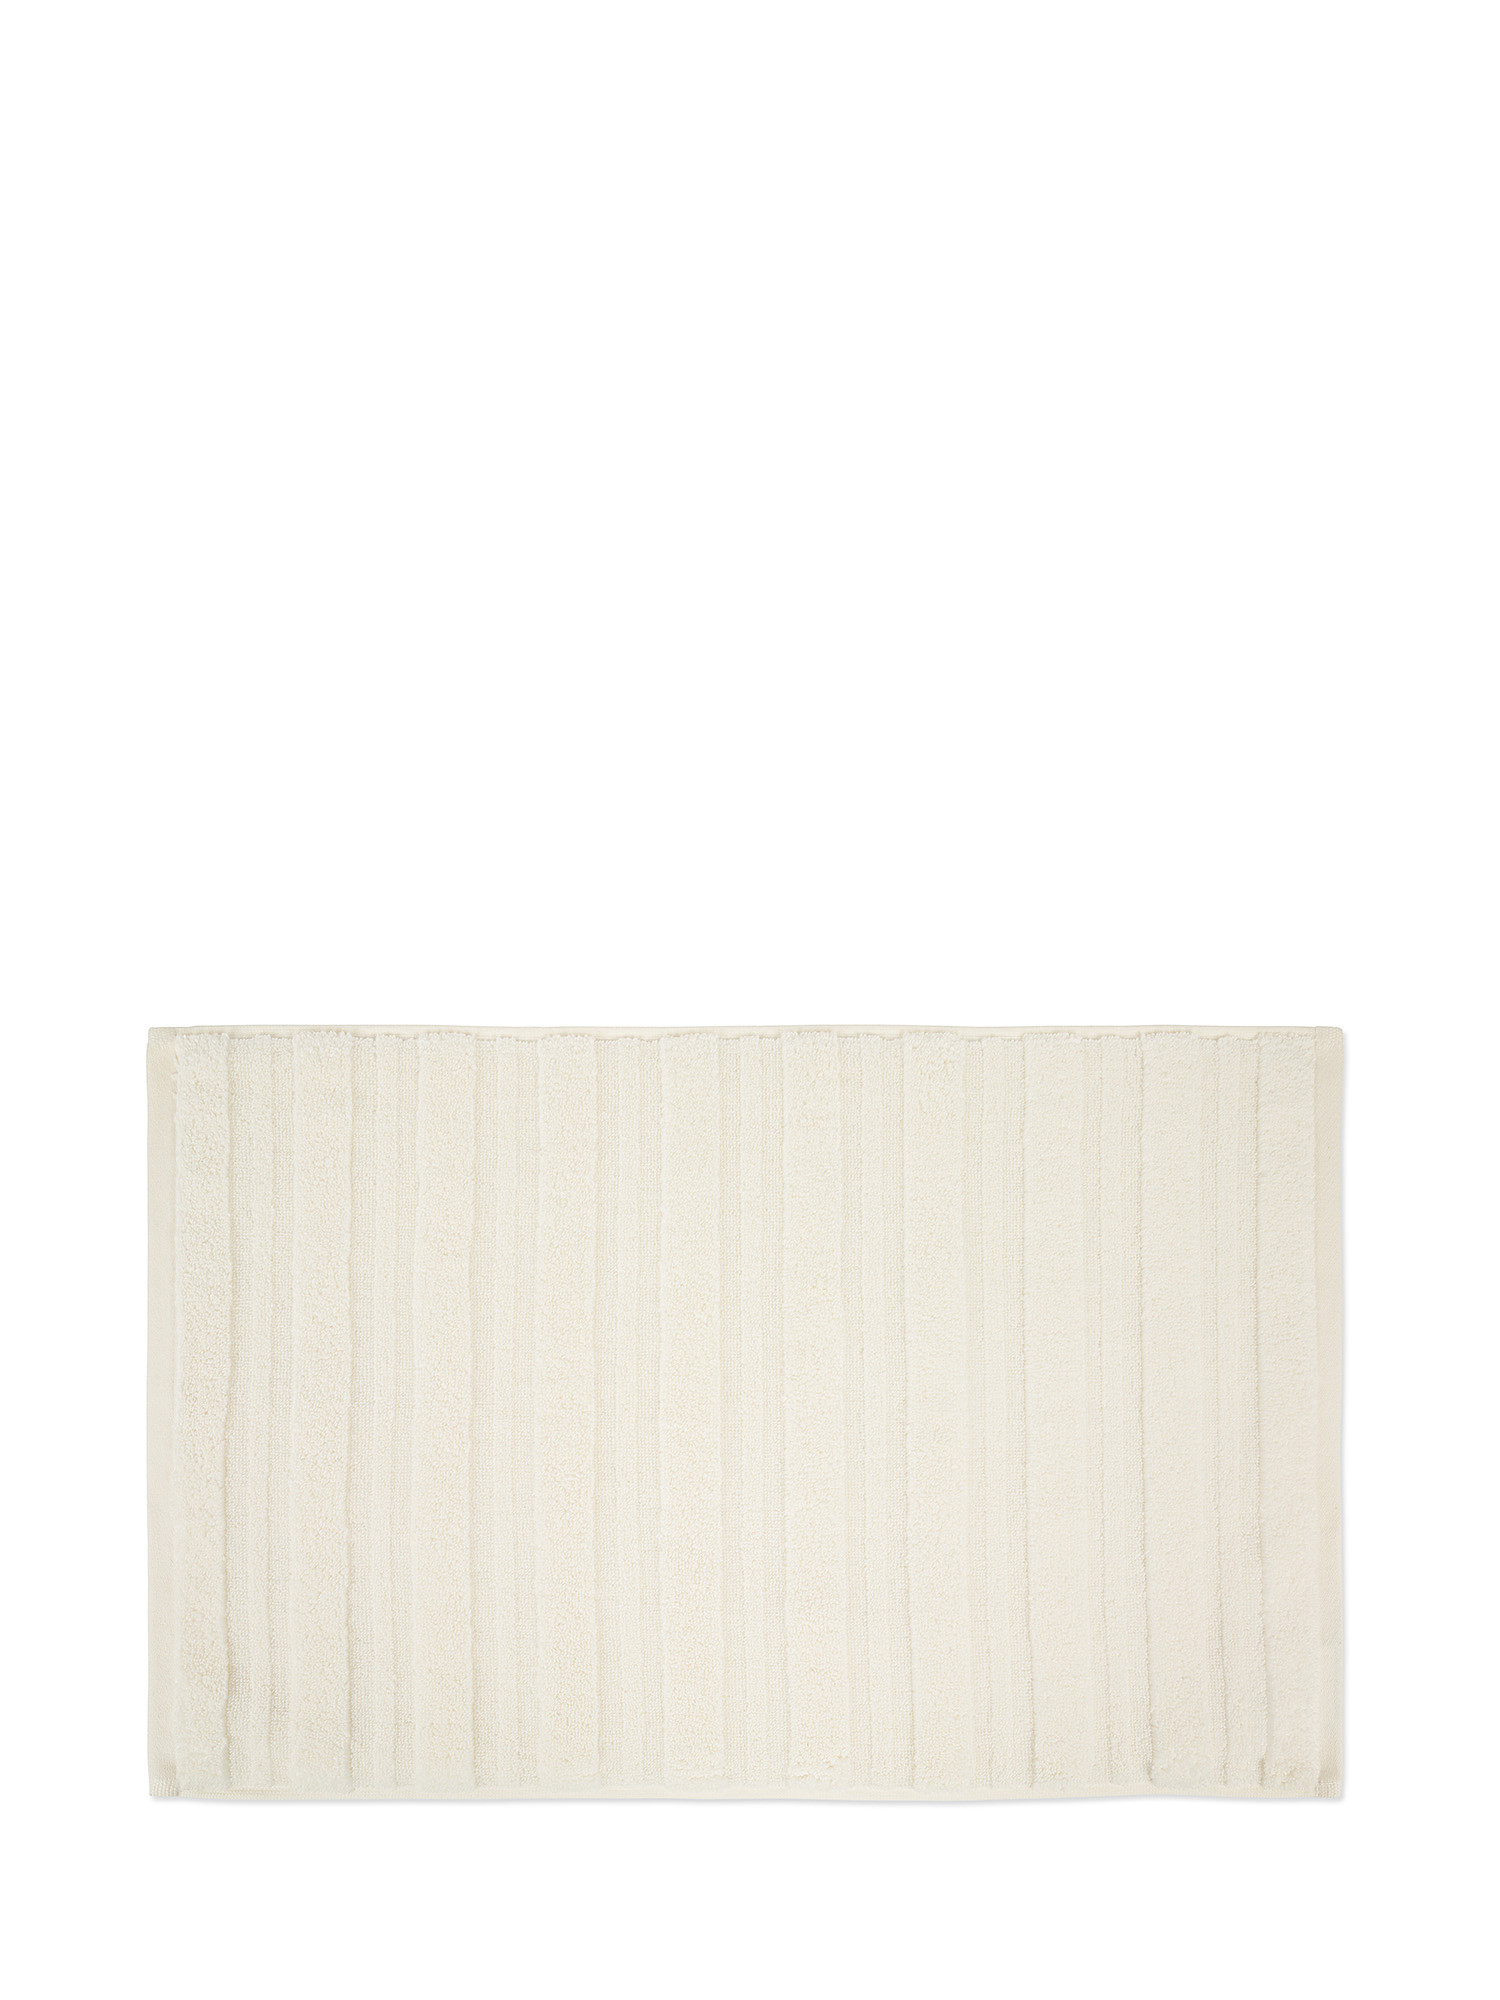 Asciugamano puro cotone tinta unita Zefiro Gold, Bianco, large image number 1